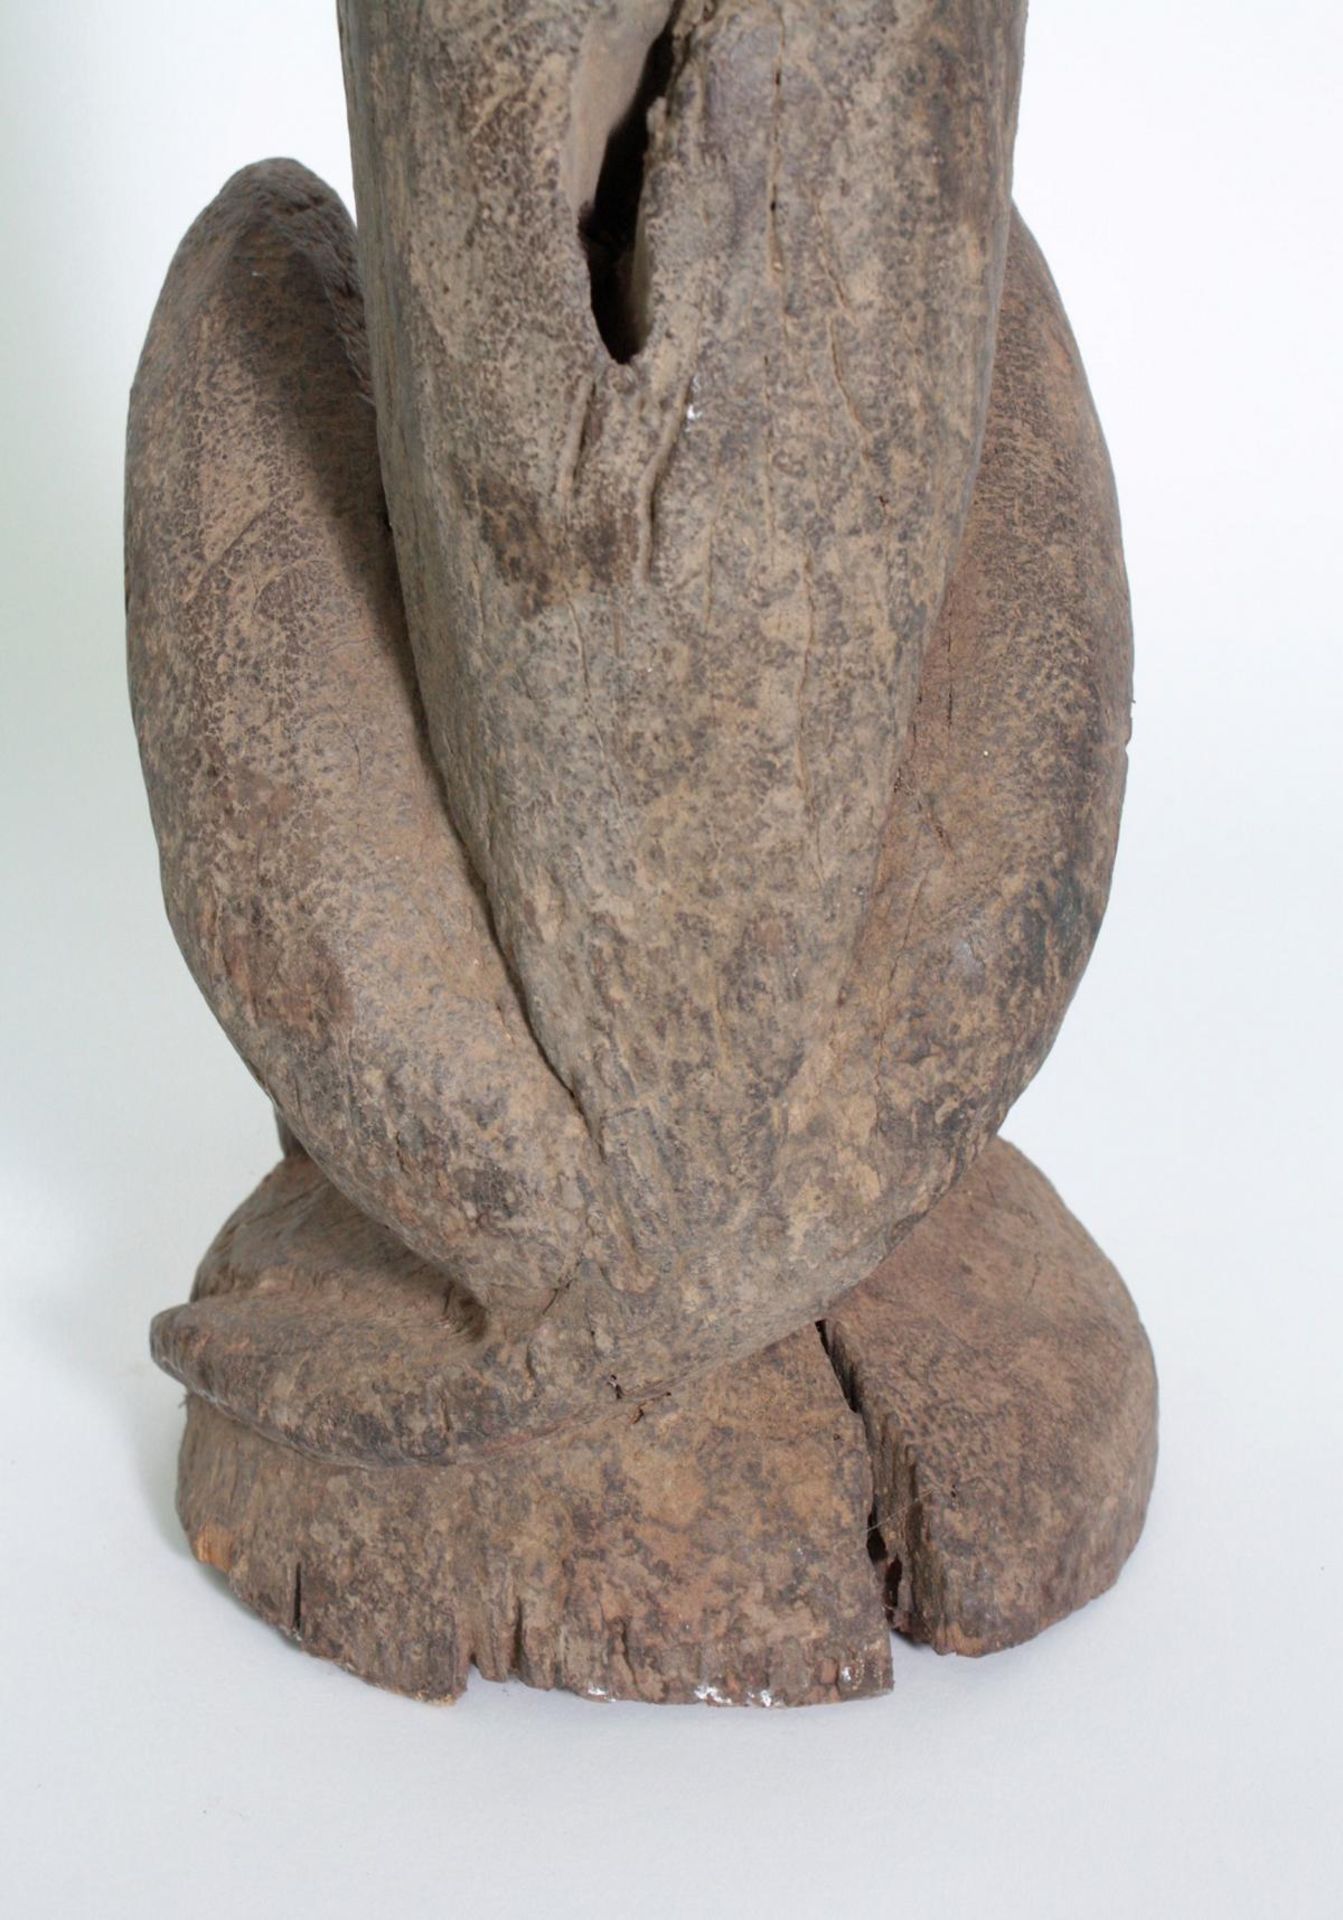 Hockende zoomorphe Figur, wohl Lobi, Burkina Faso, 1. Hälfte 20. Jh. - Image 6 of 10